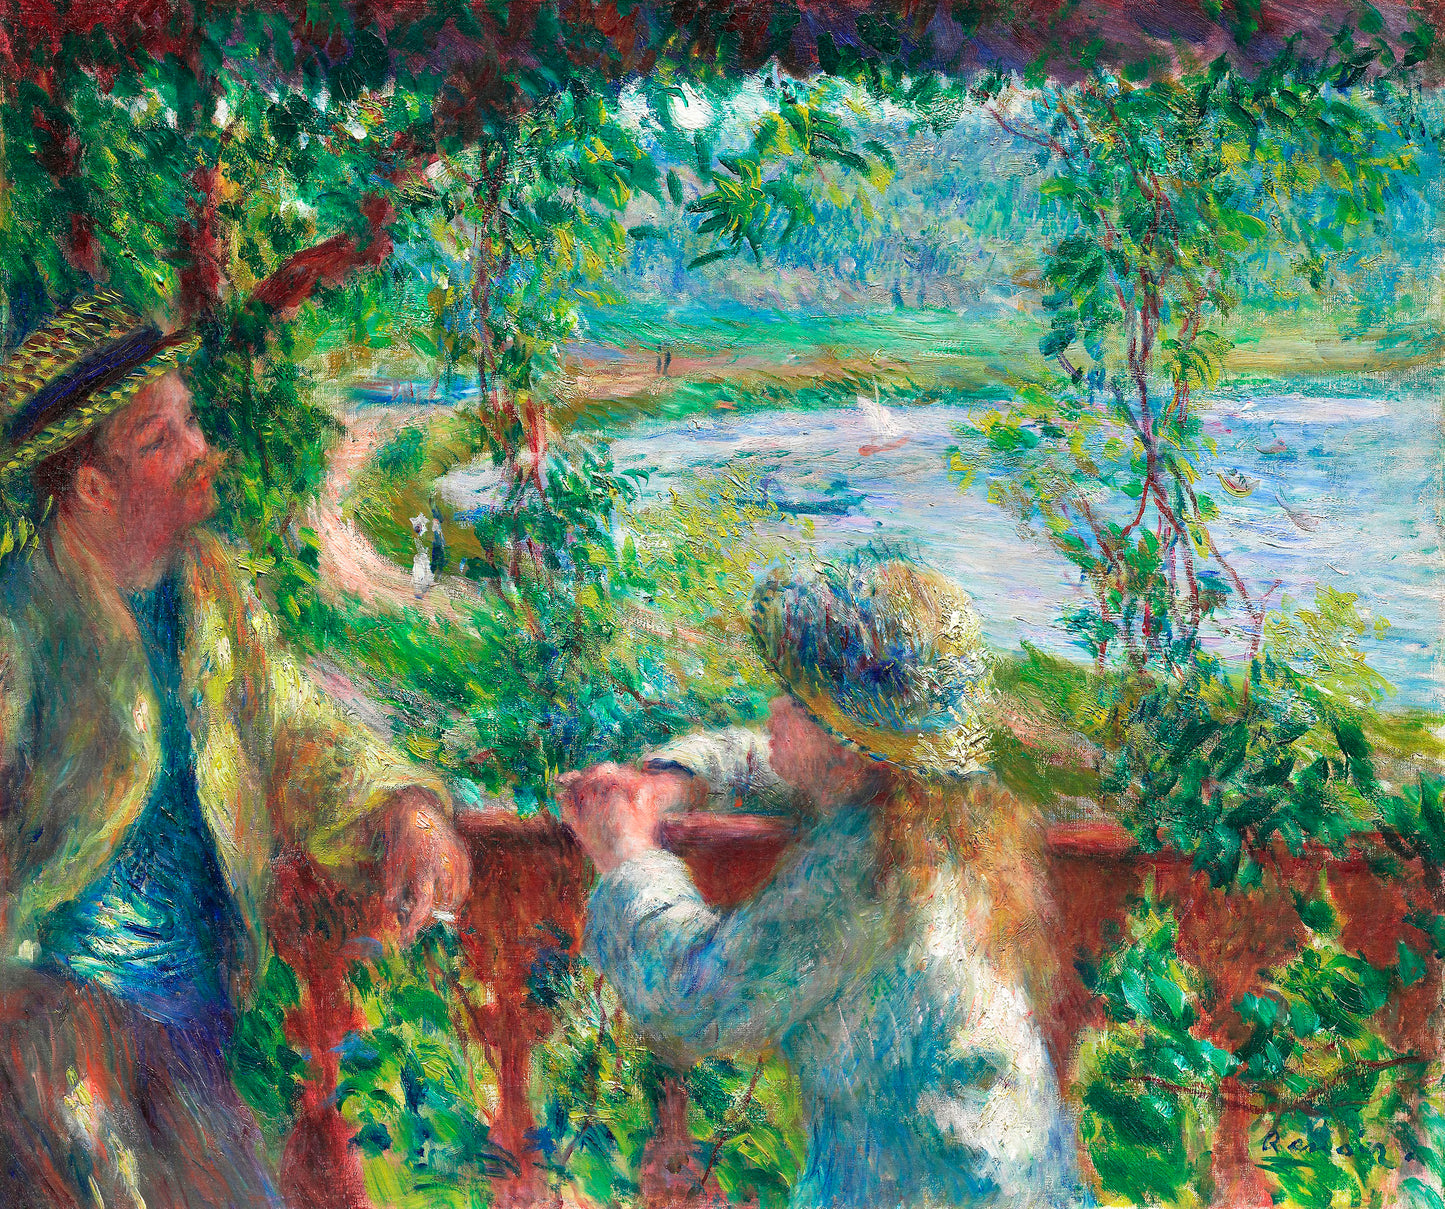 Pierre-Auguste Renoir - Near the Lake 1879 - Digital Art - JPG File Download